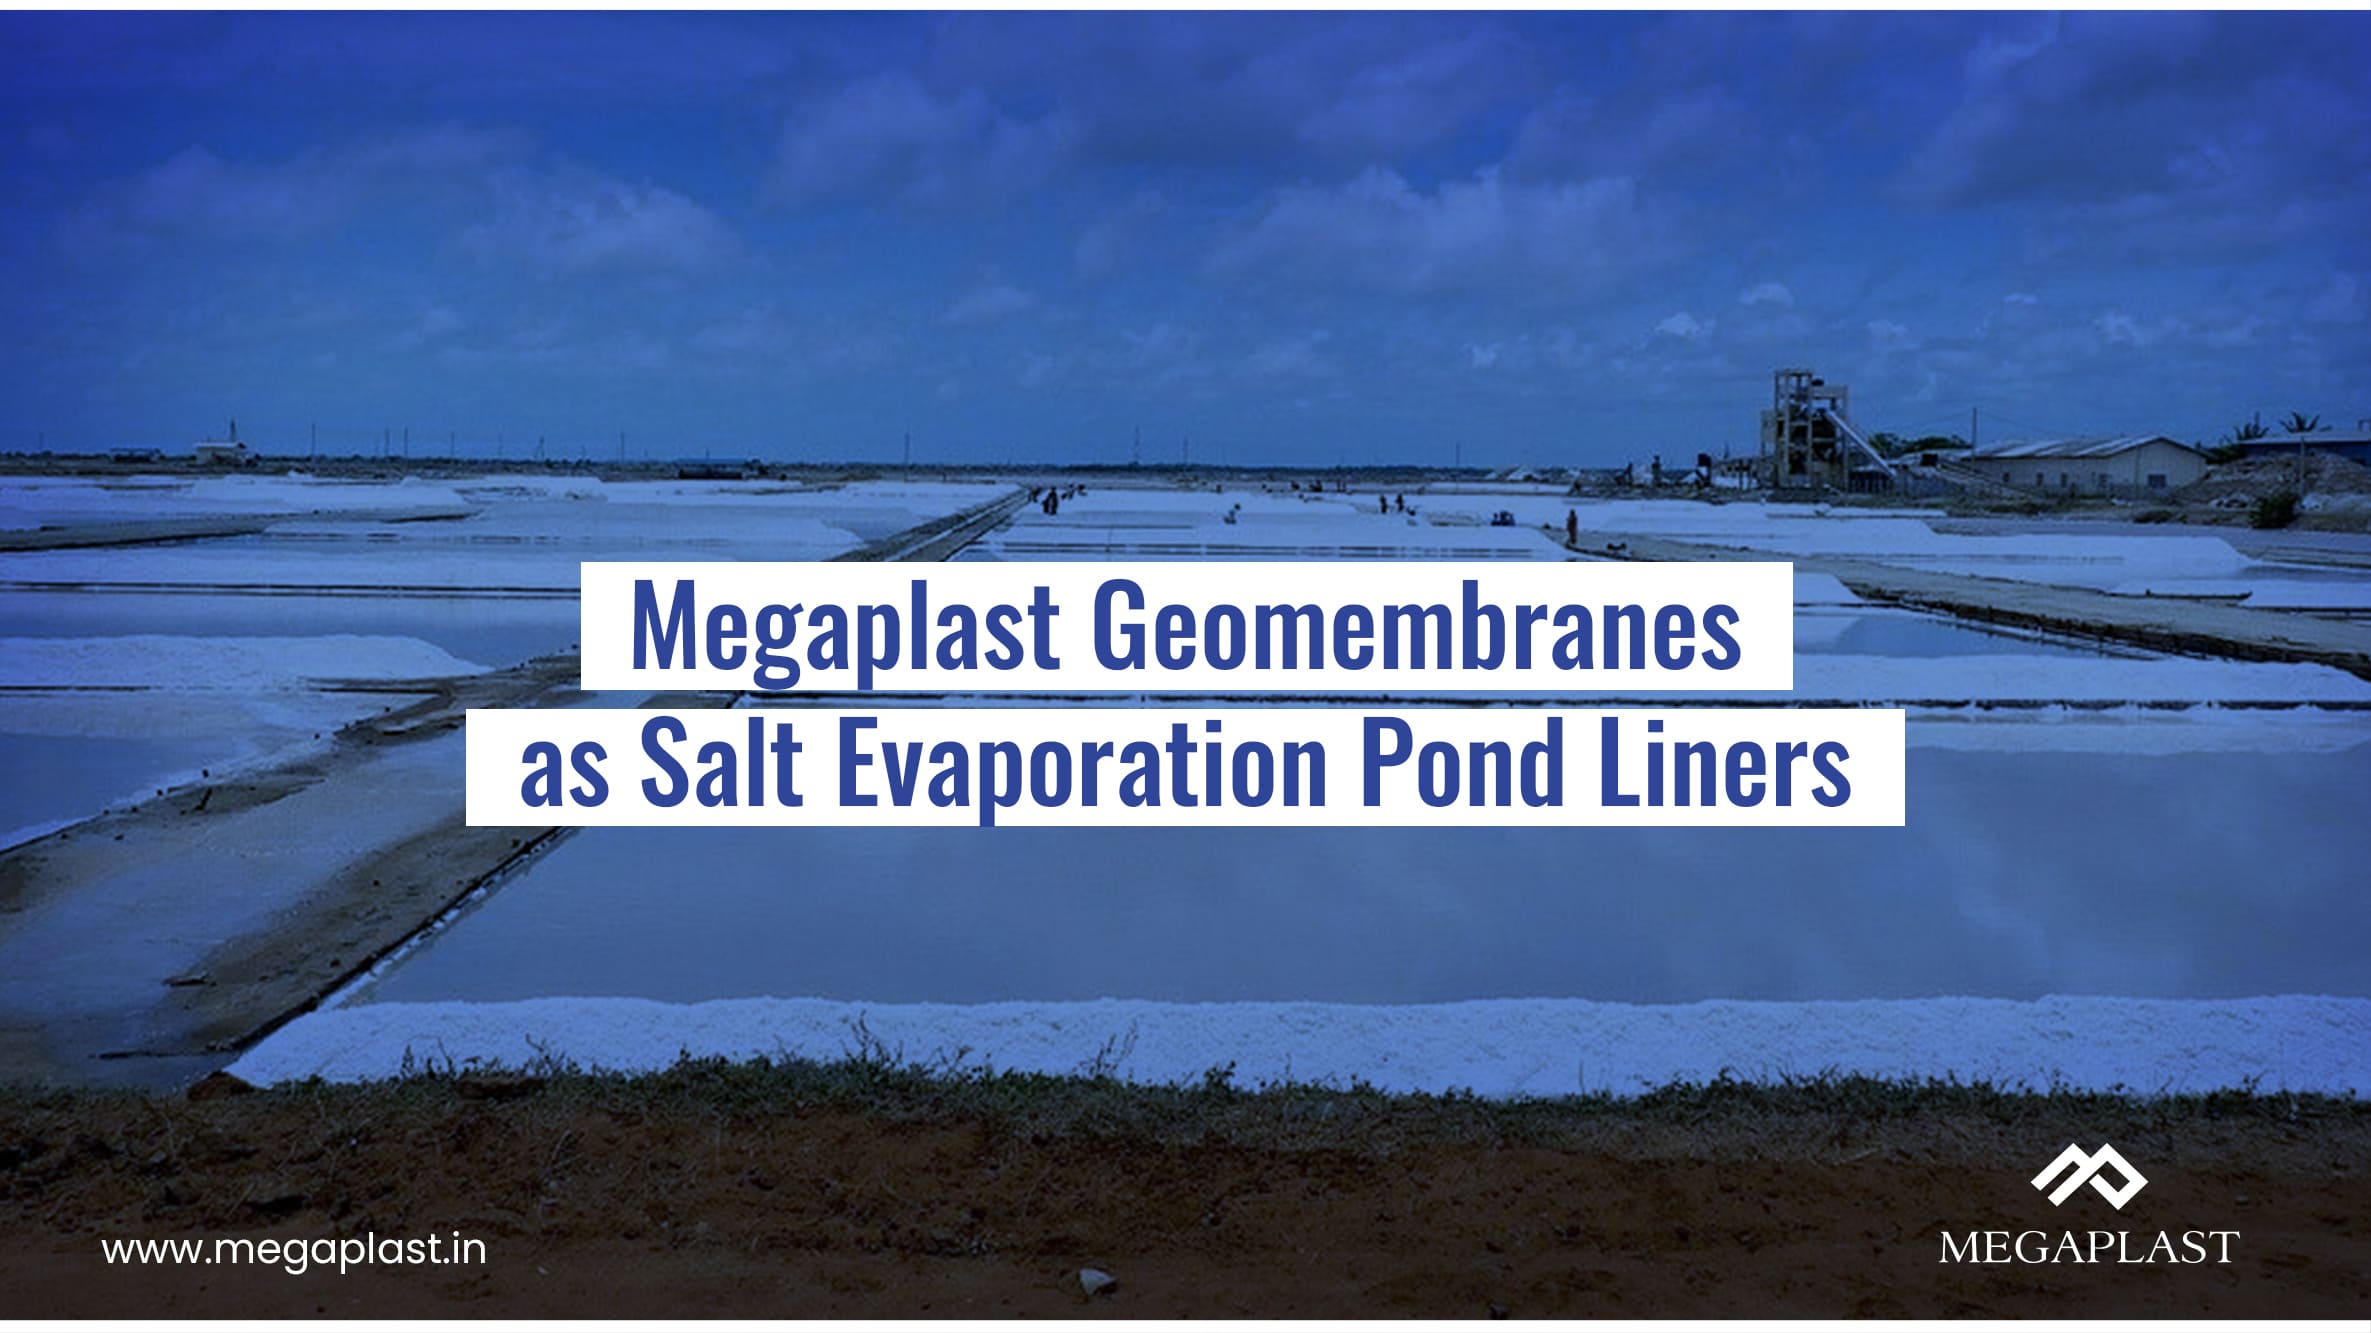 Megaplast Geomembranes as salt evaporation pond liners